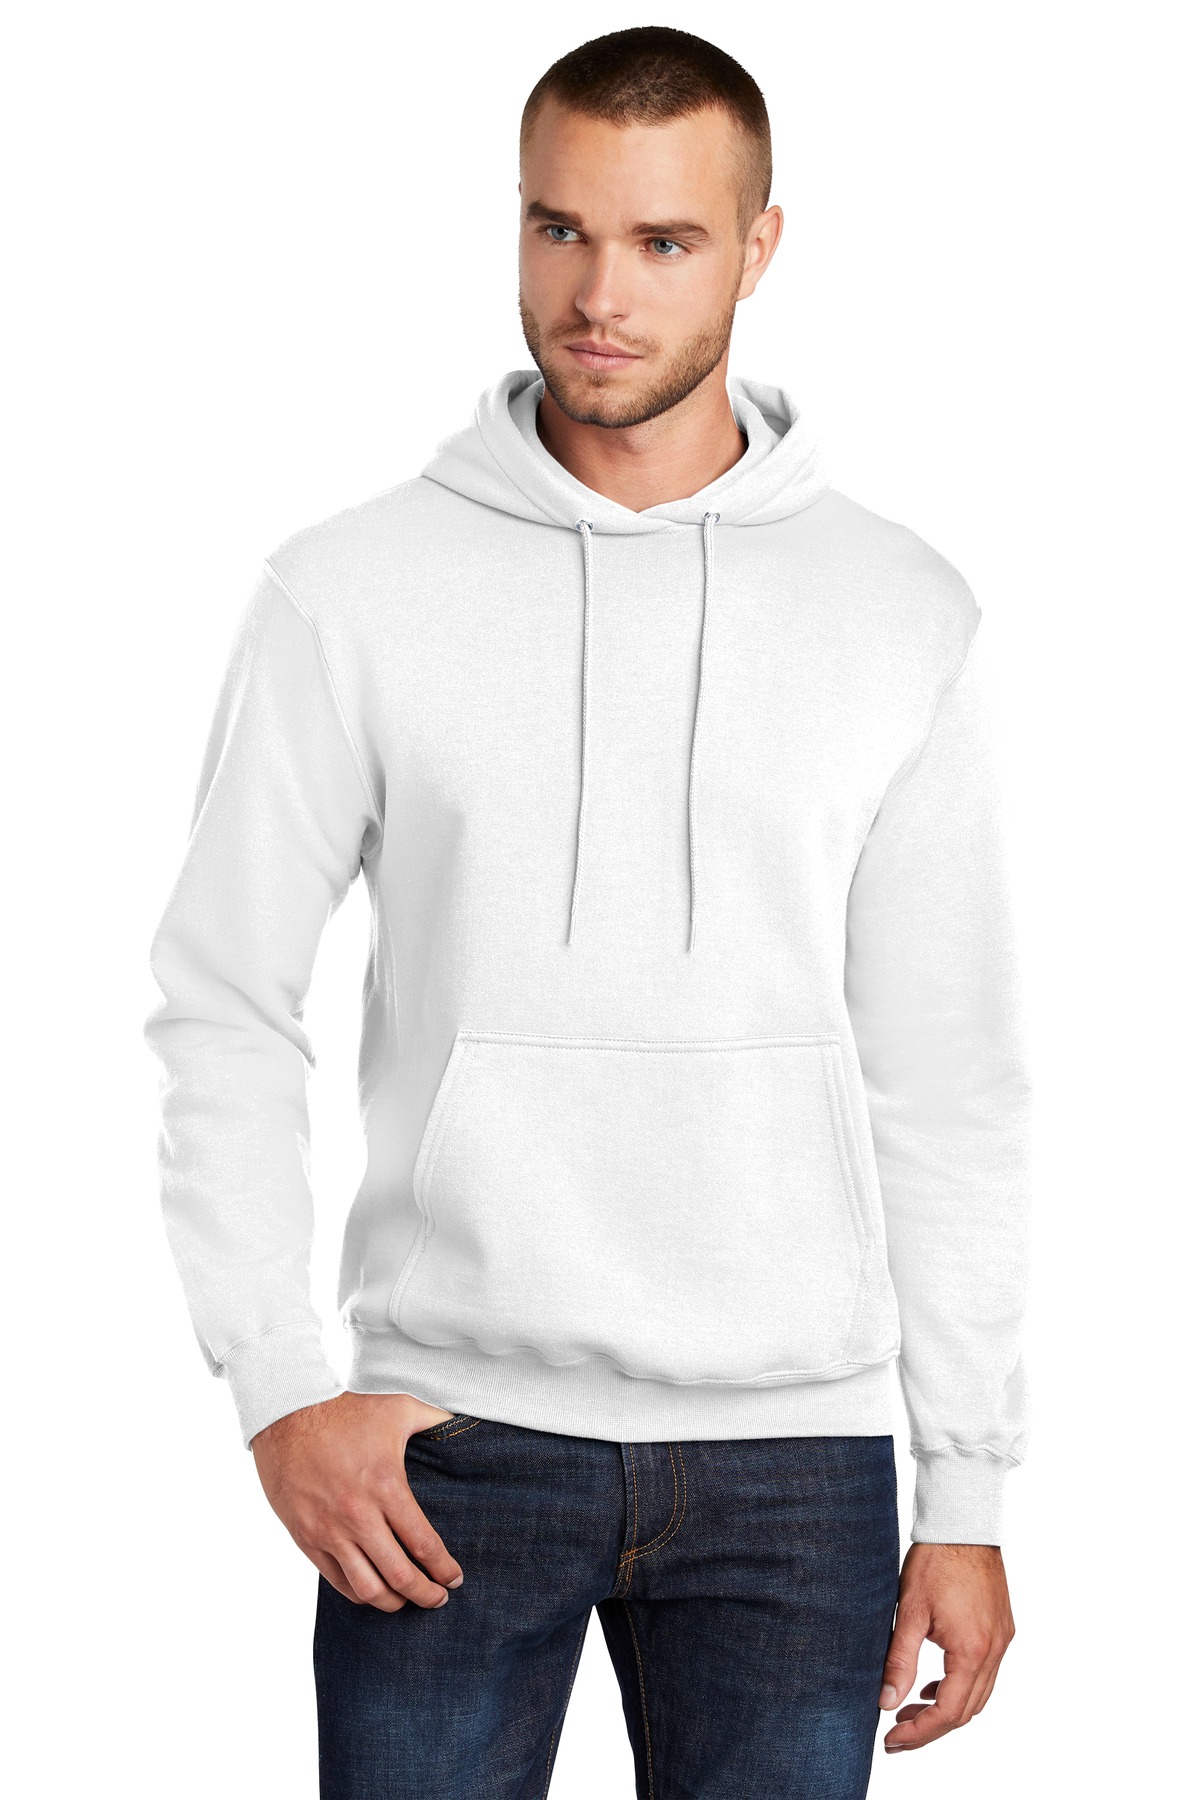 Port &#38; Company Tall Core Fleece Pullover Hooded Sweatshirt-Port & Company